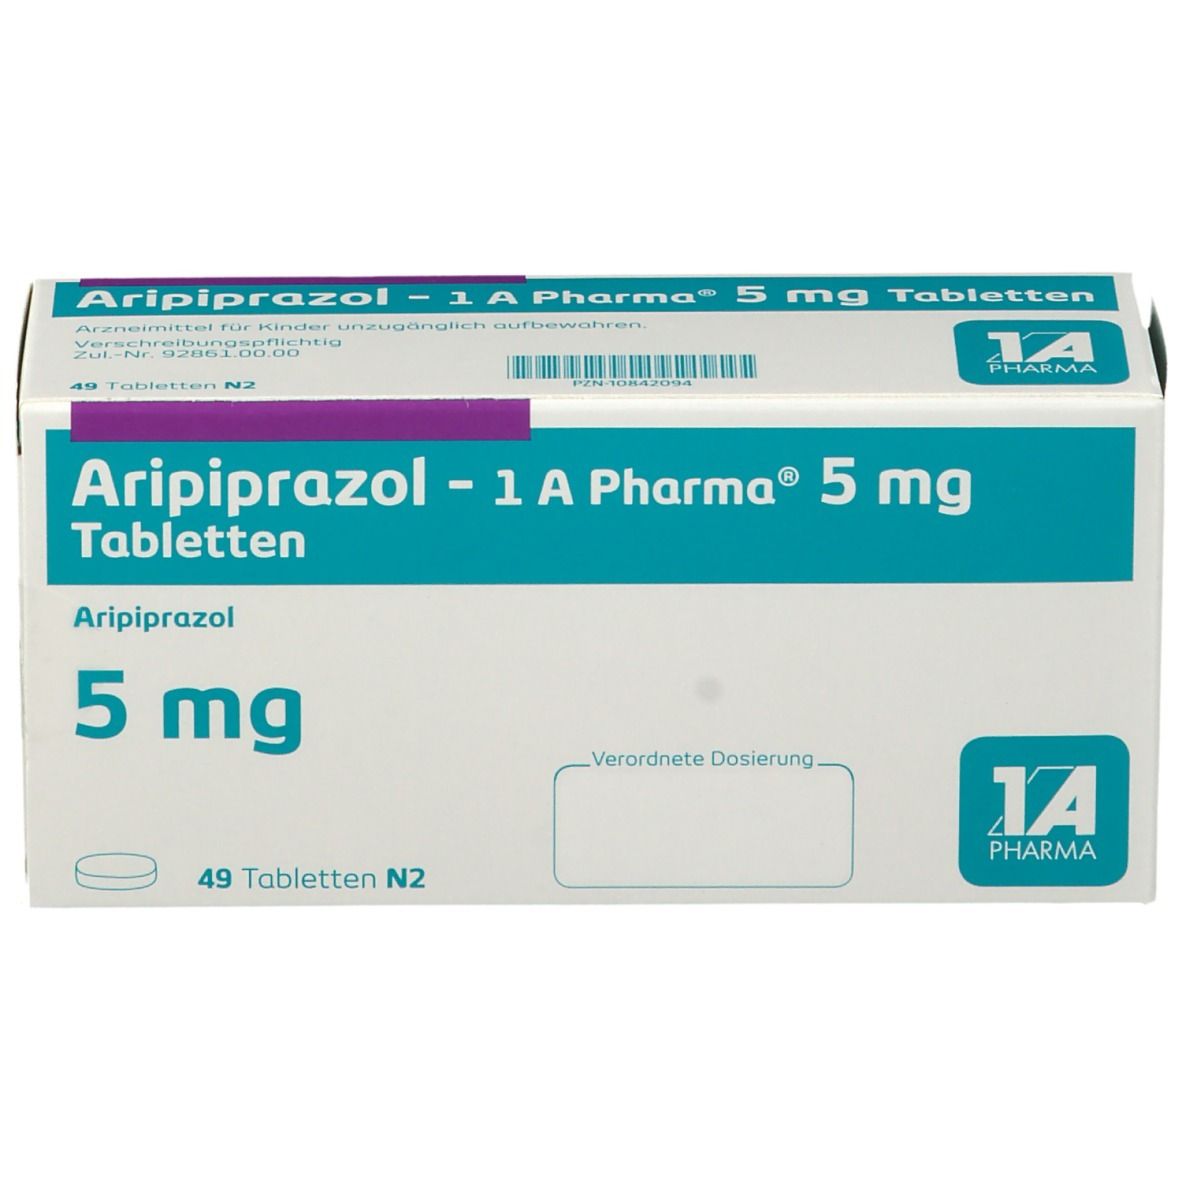 Aripiprazol - 1 A Pharma® 5 mg